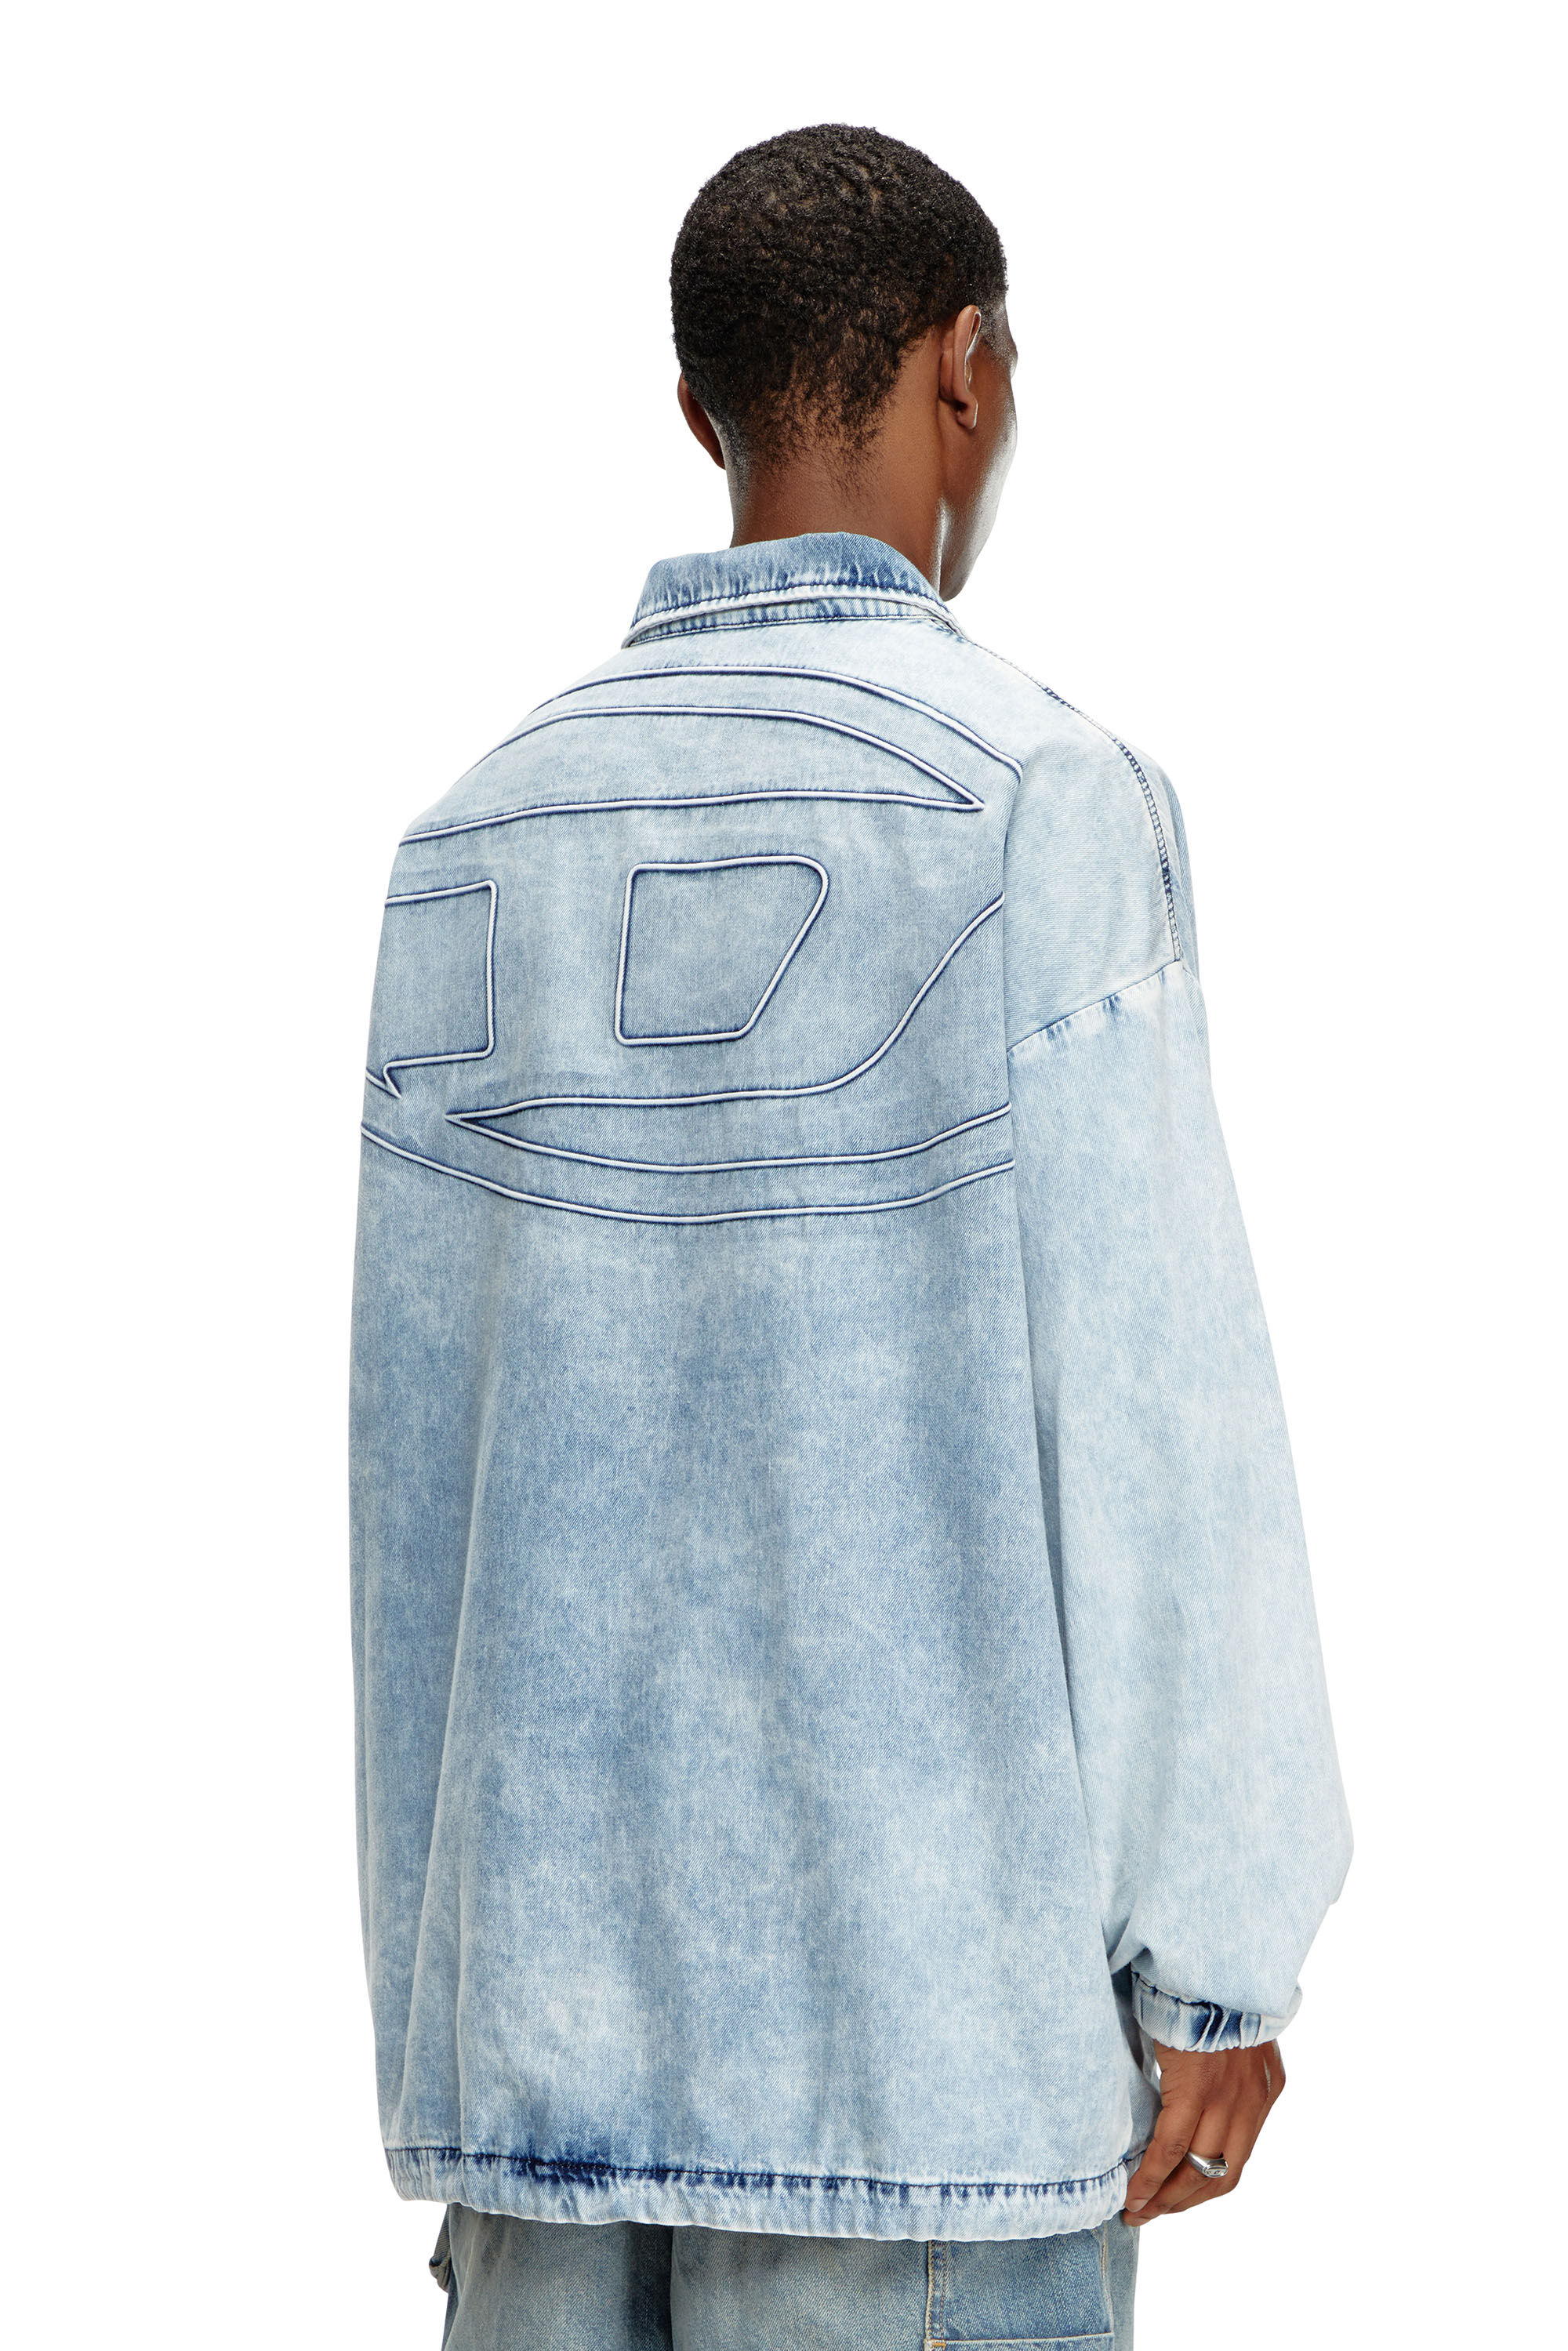 Diesel - D-KRAP-S1, Man Denim jacket with Oval D in Blue - Image 5